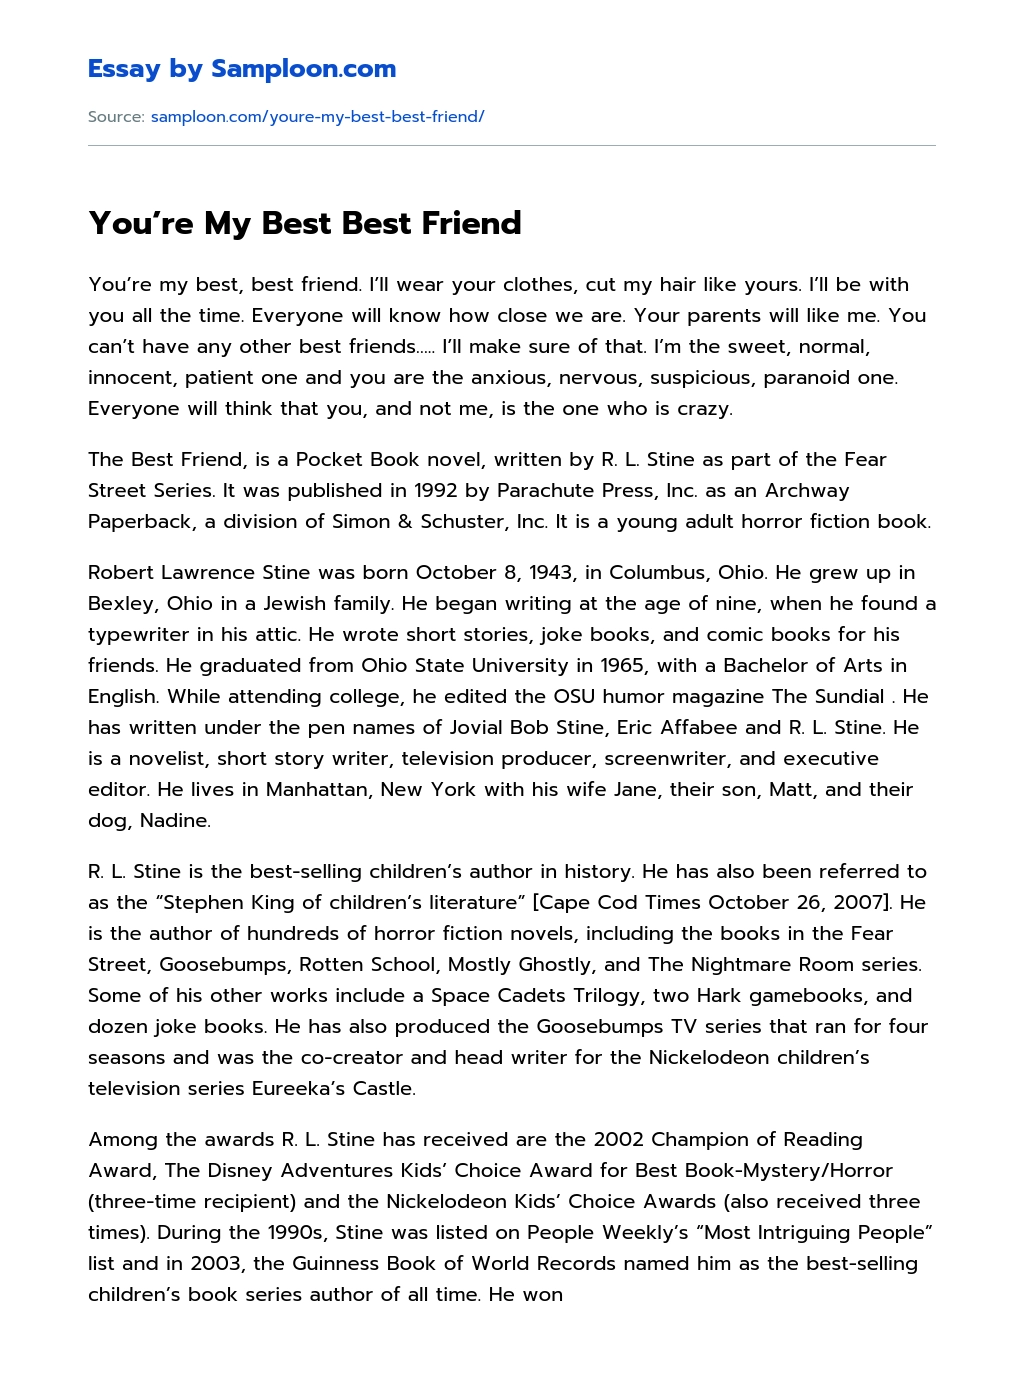 You’re My Best Best Friend essay